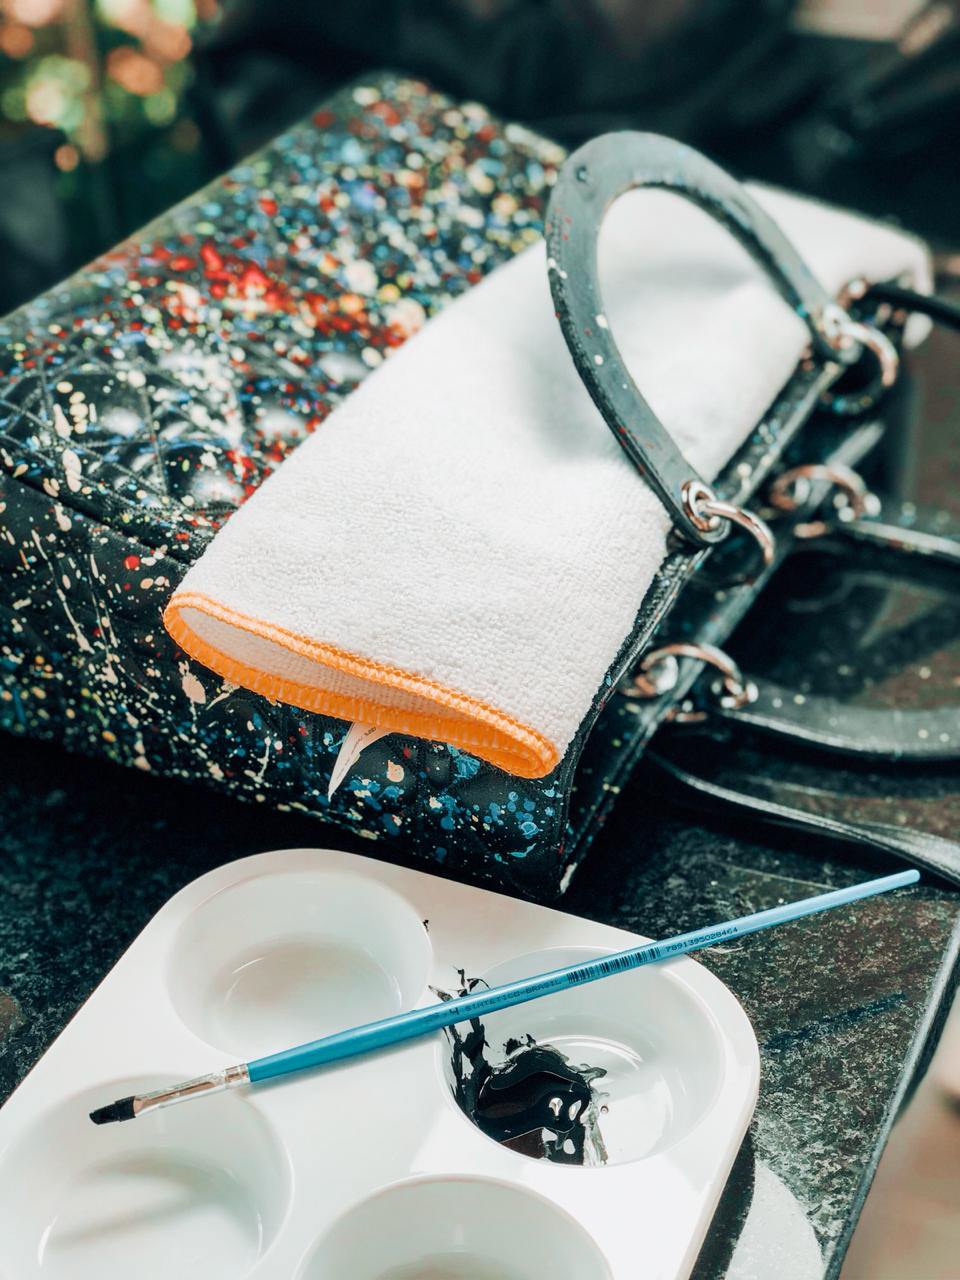 detailing Fashion  couture chic designer purse bag haute